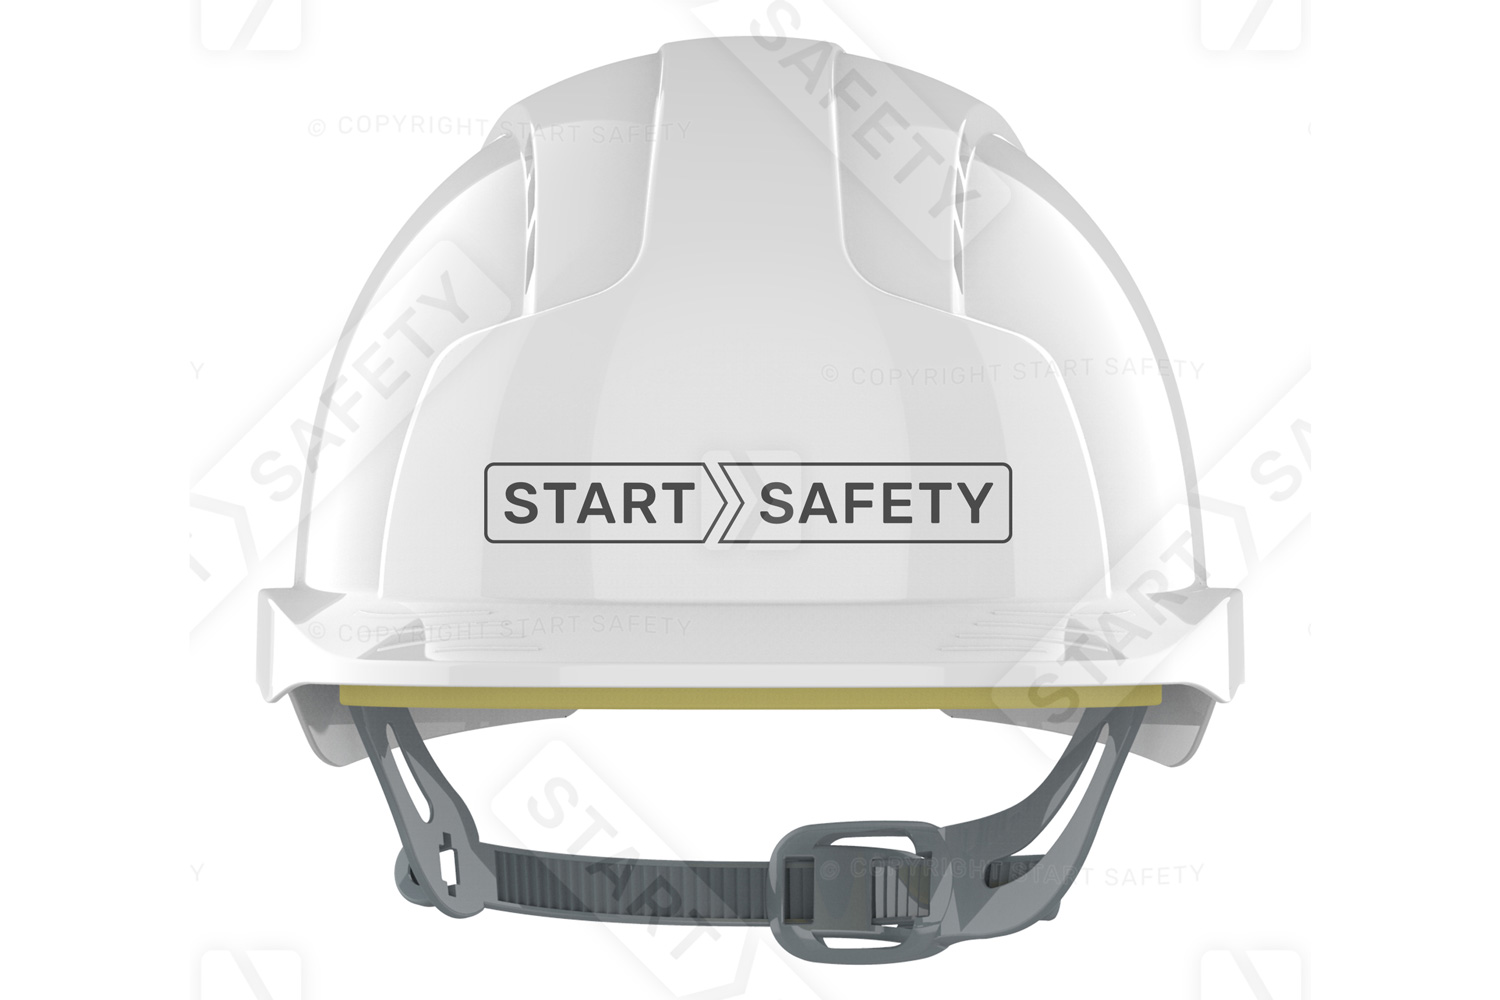 Branding Areas On The Helmet